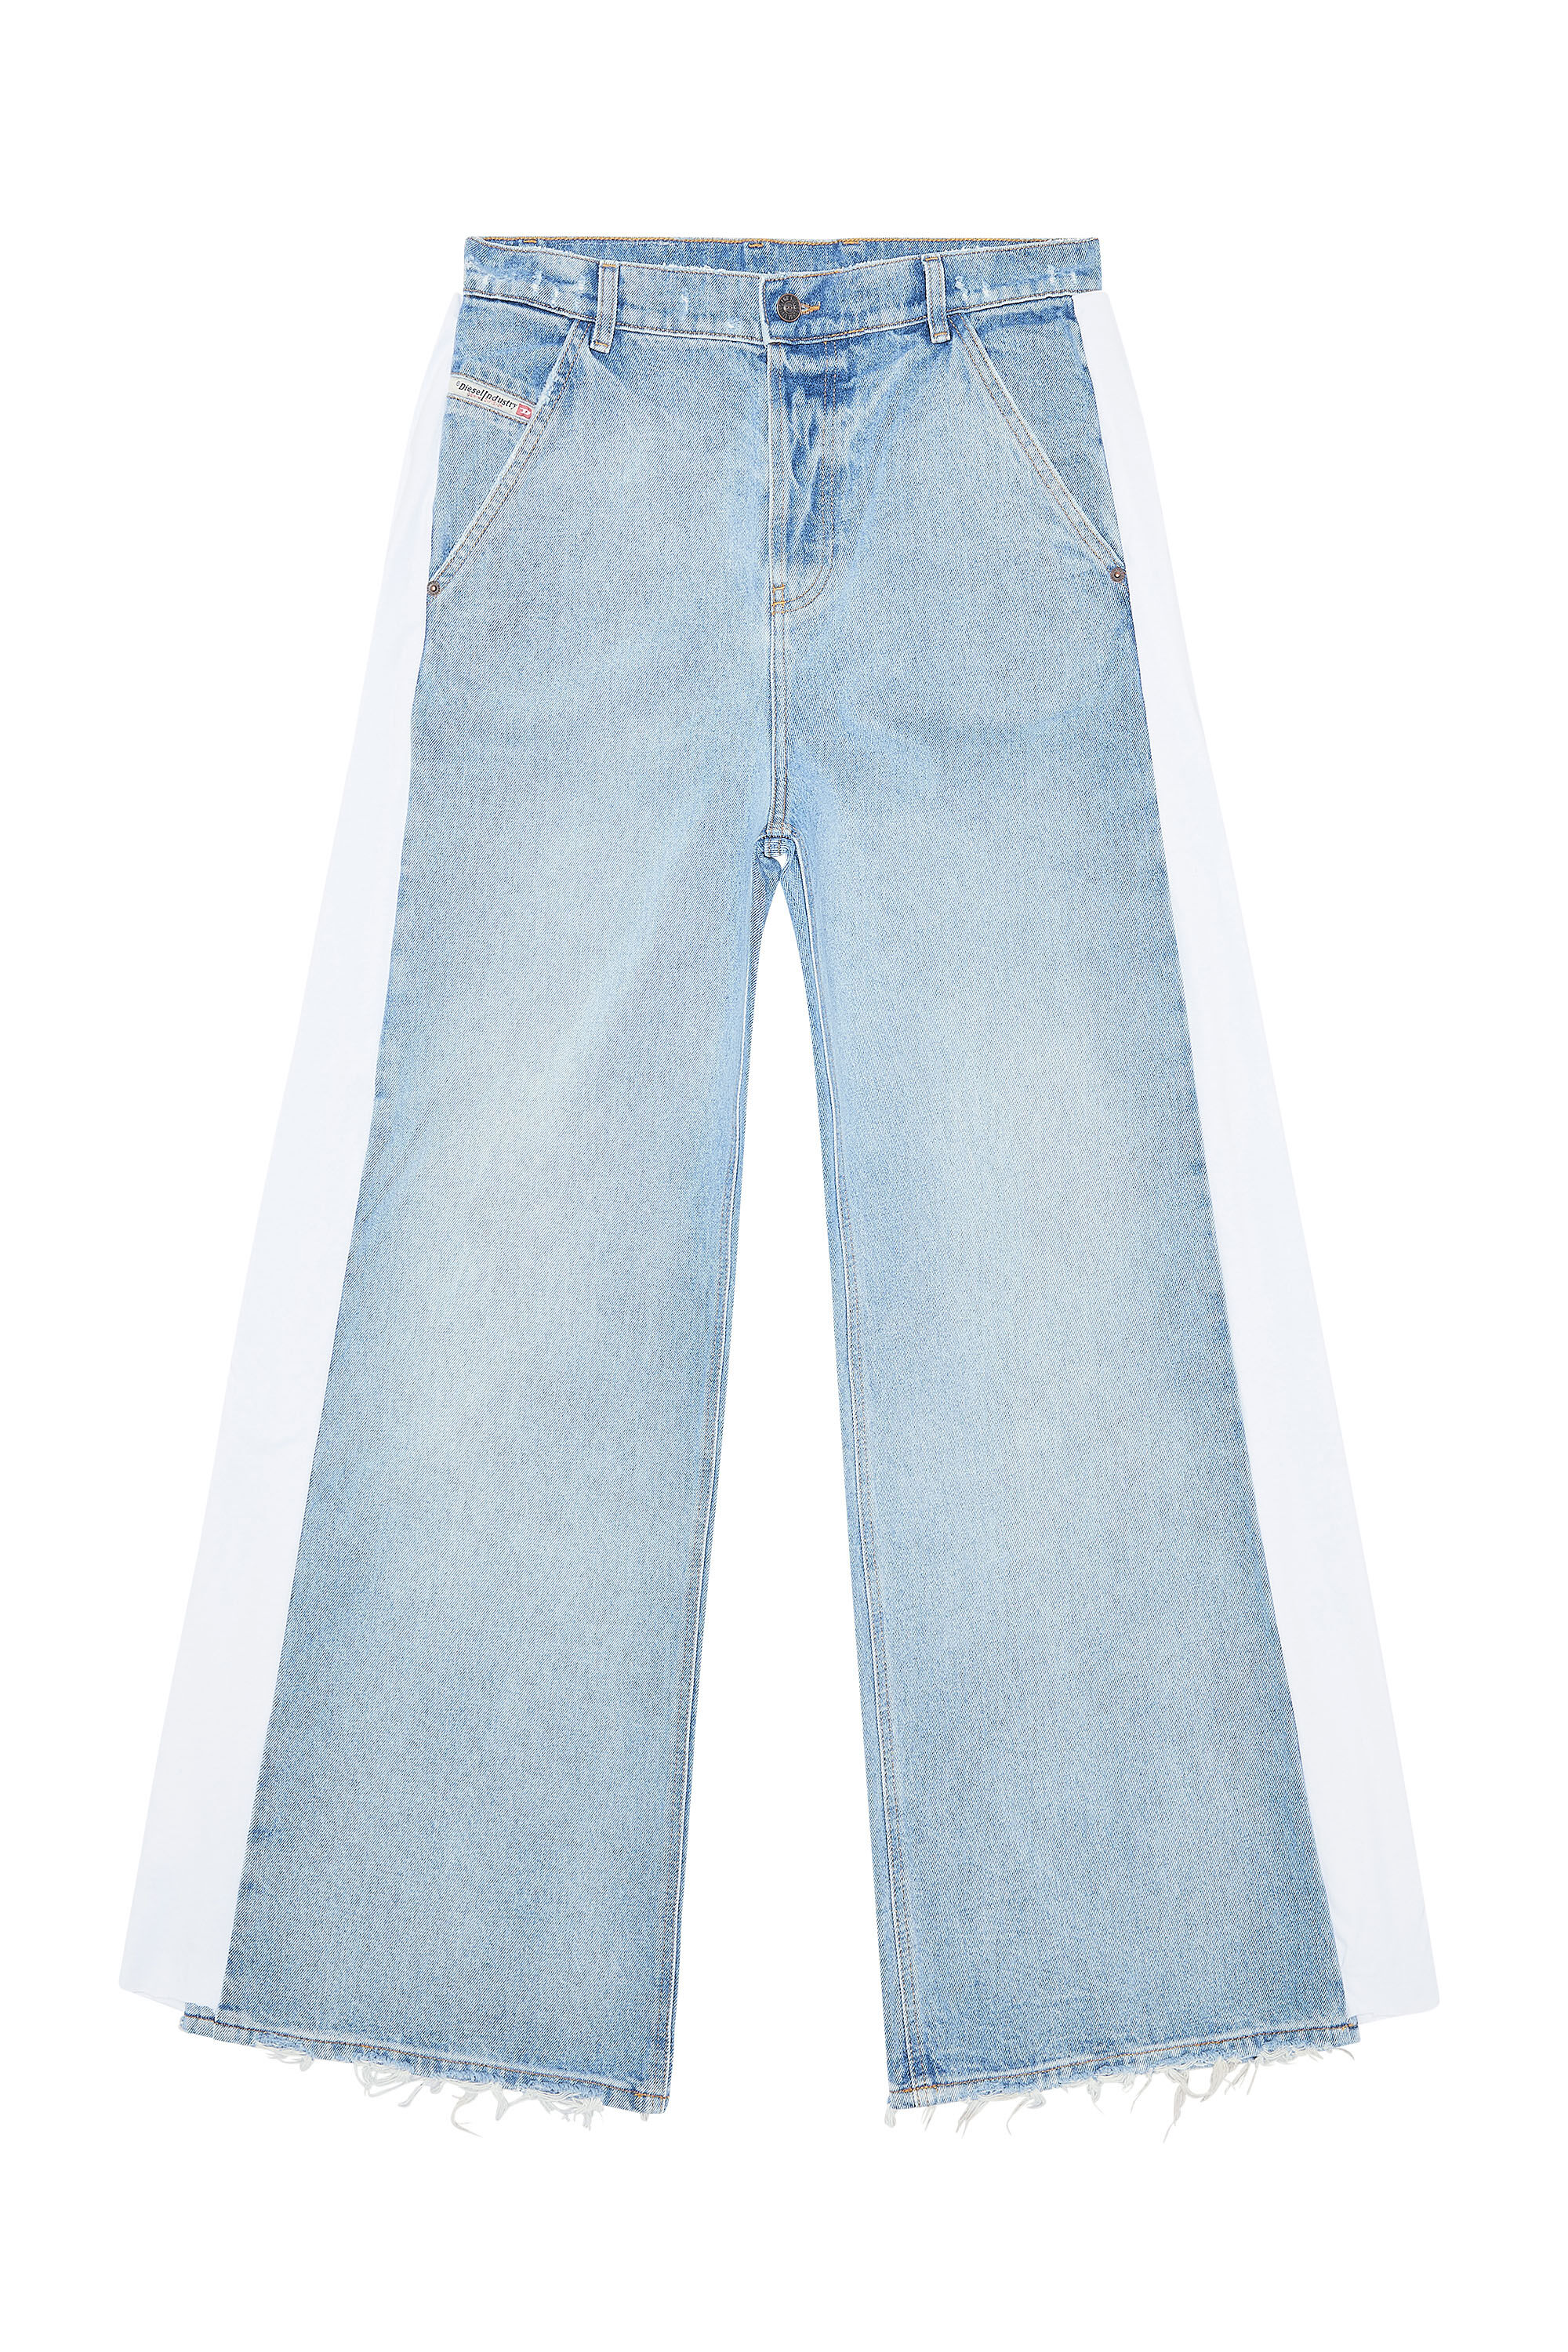 Diesel D-SIRE - Relaxed fit jeans - denim/light-blue denim